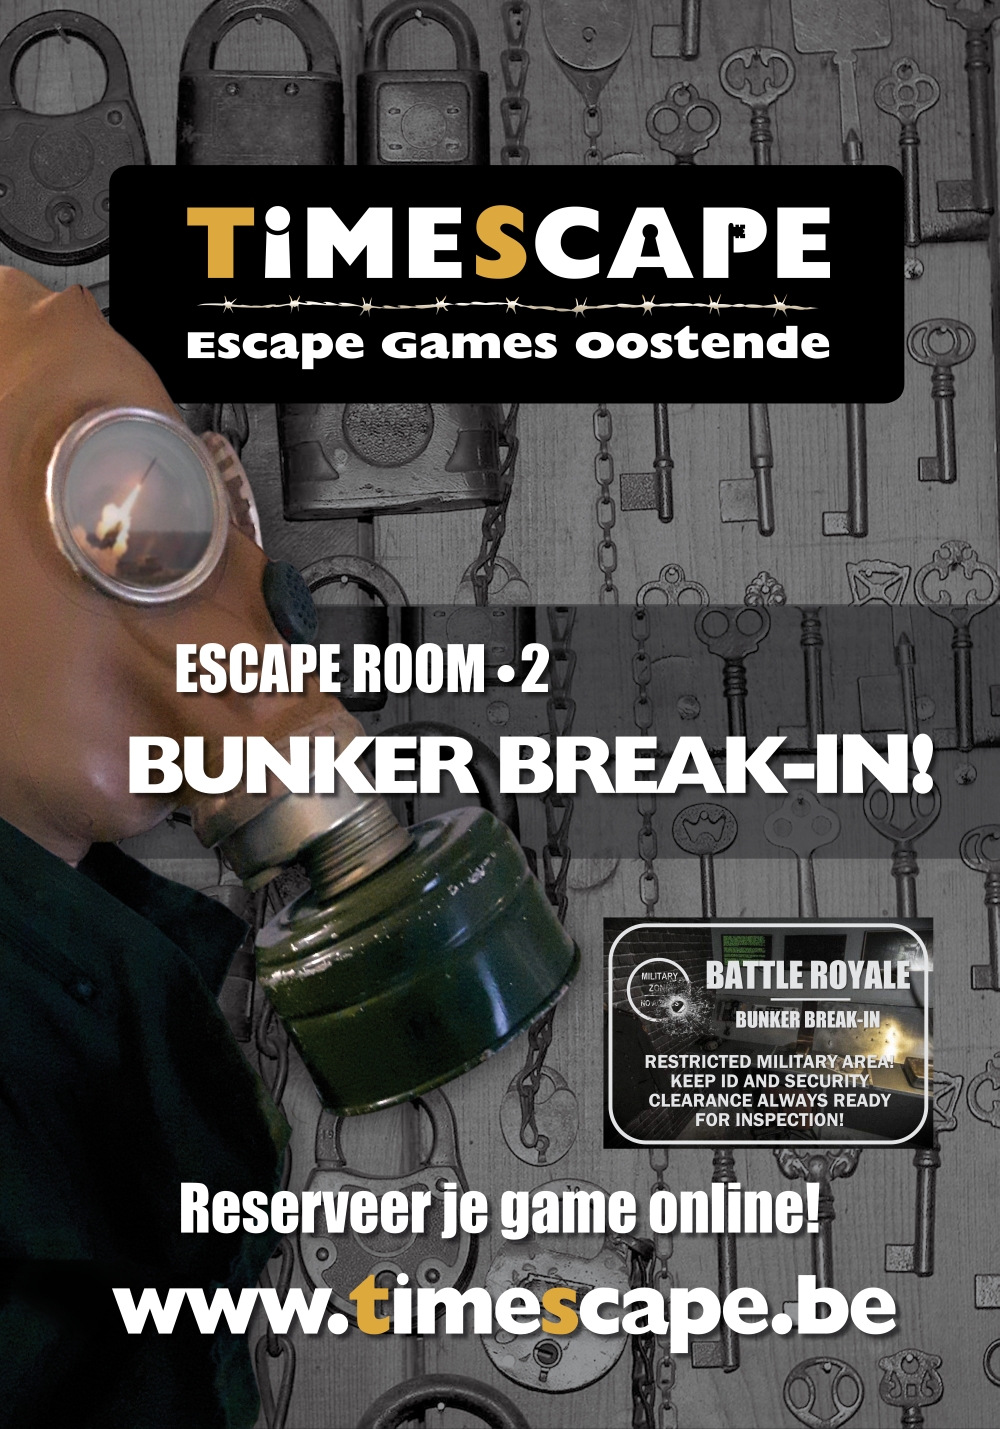 timescape escape room oostende bunker break-in game